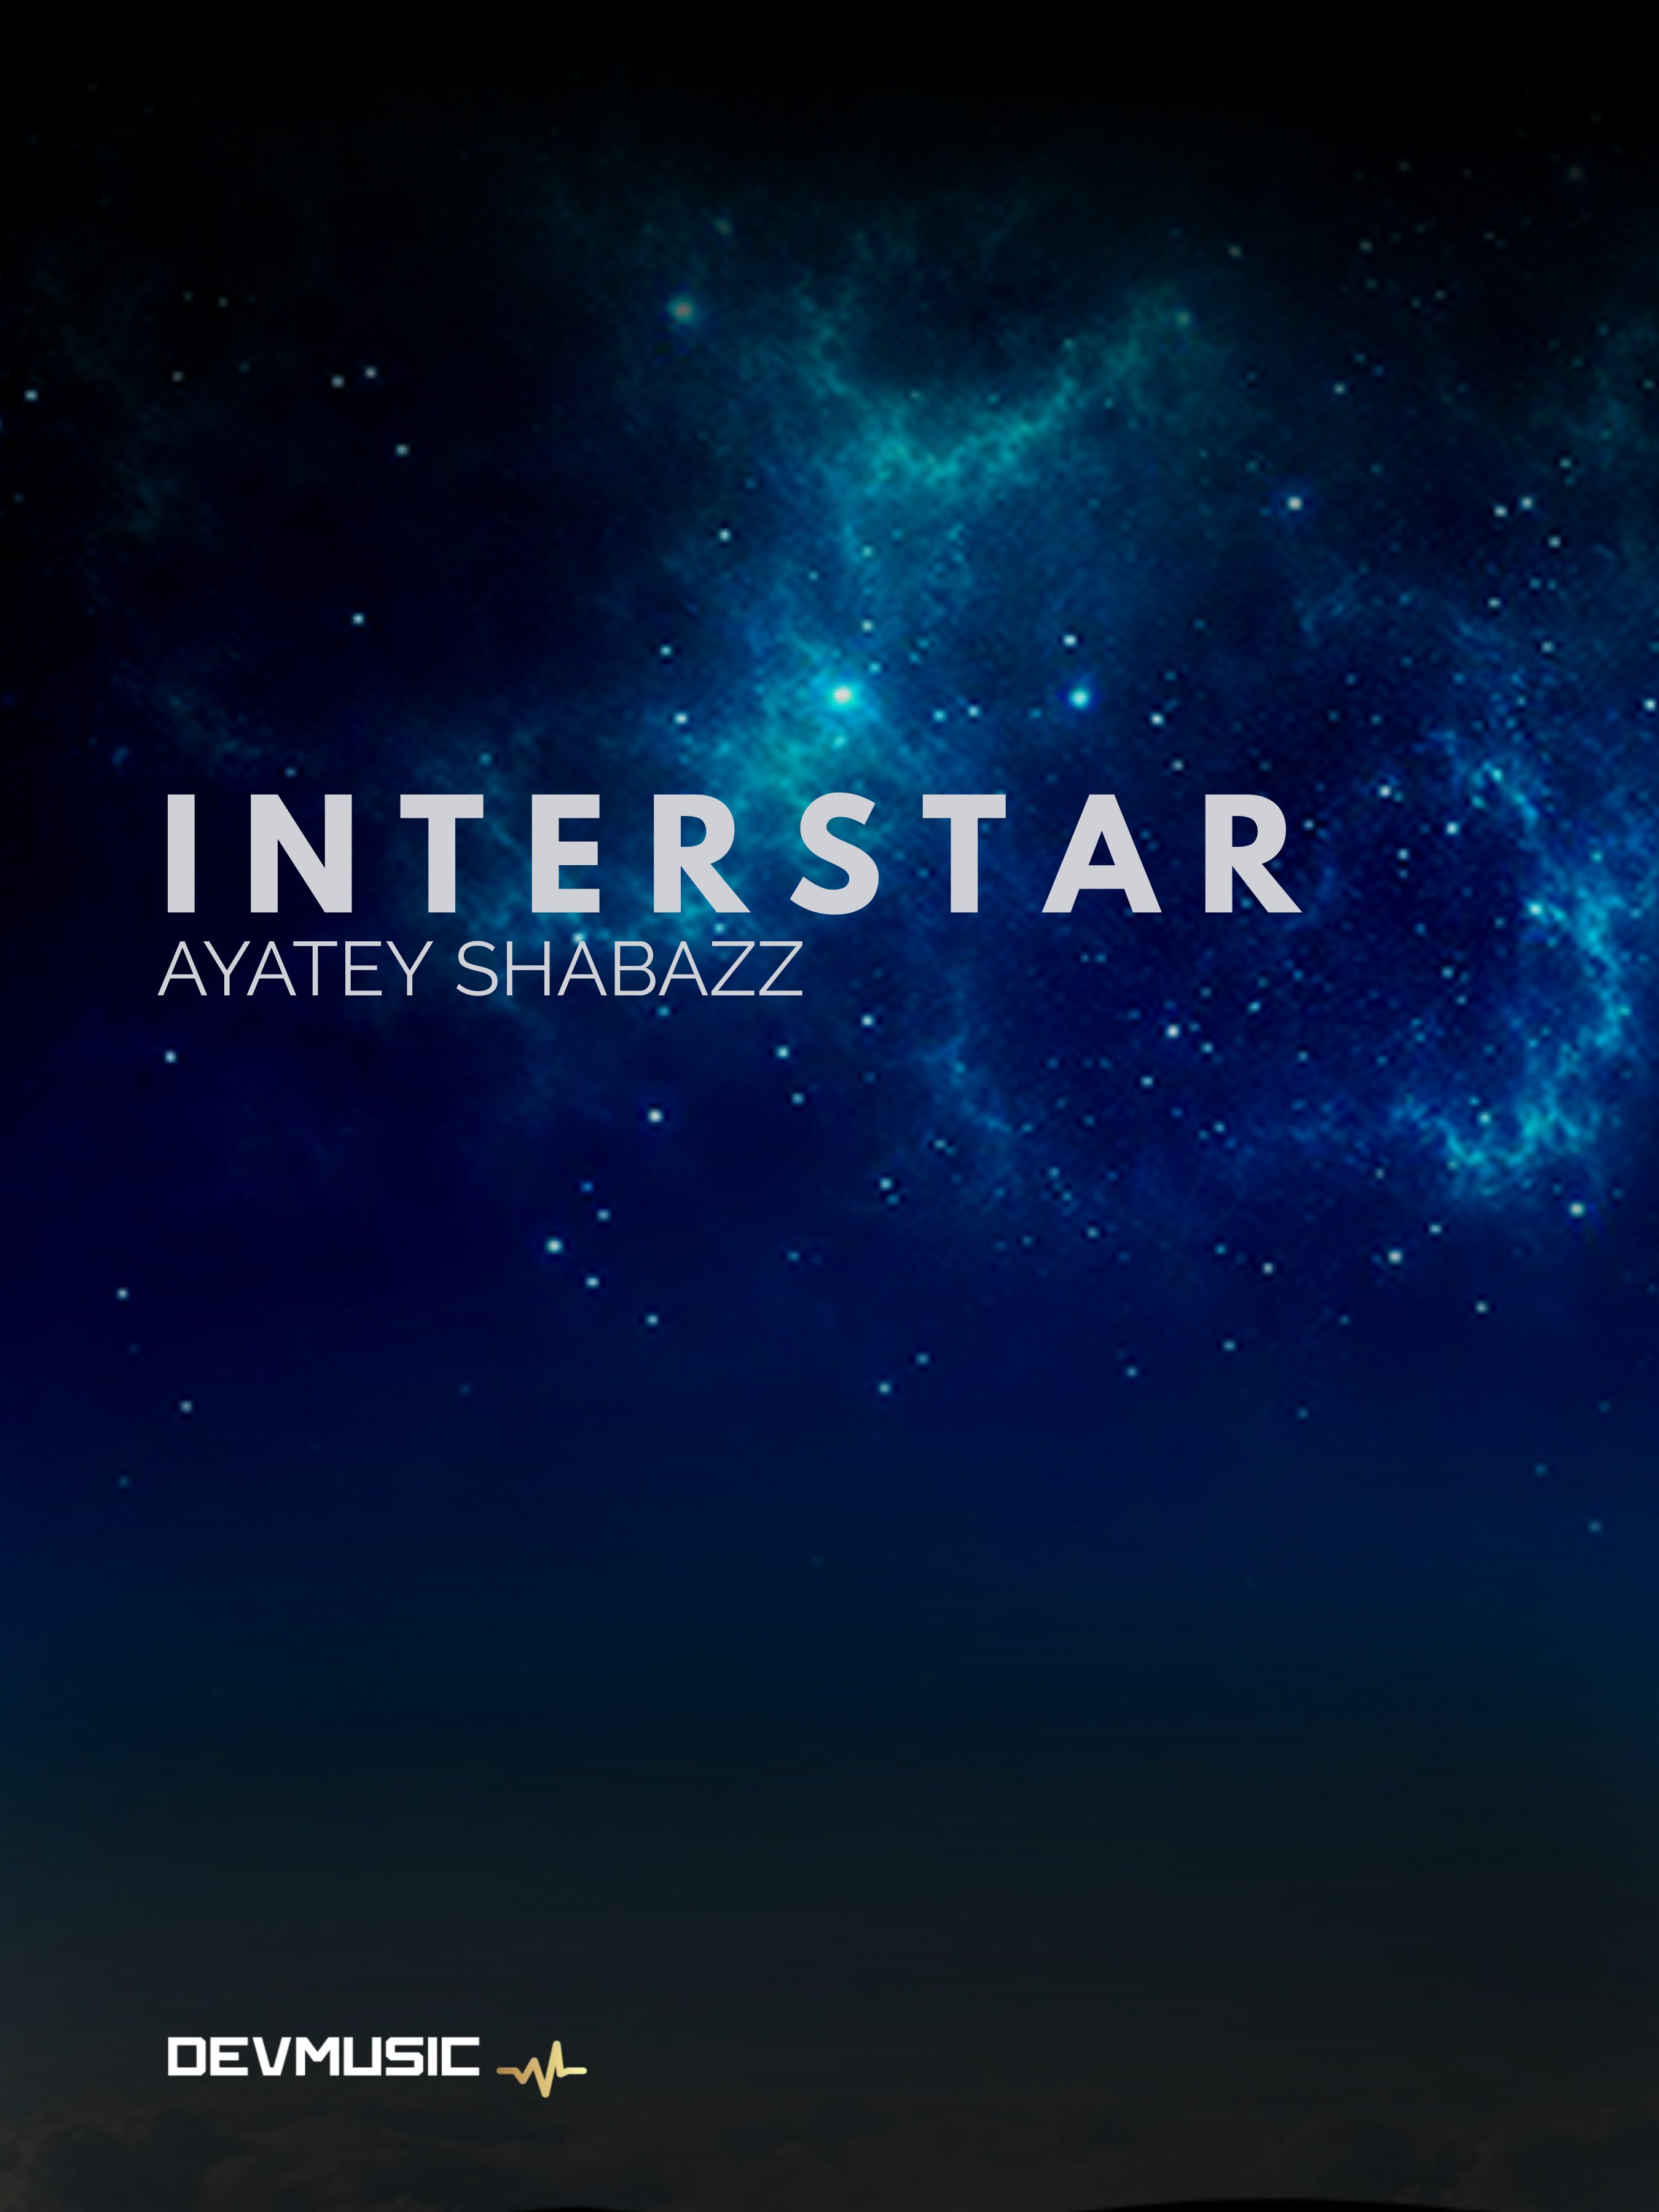 Interstar band sheet music cover